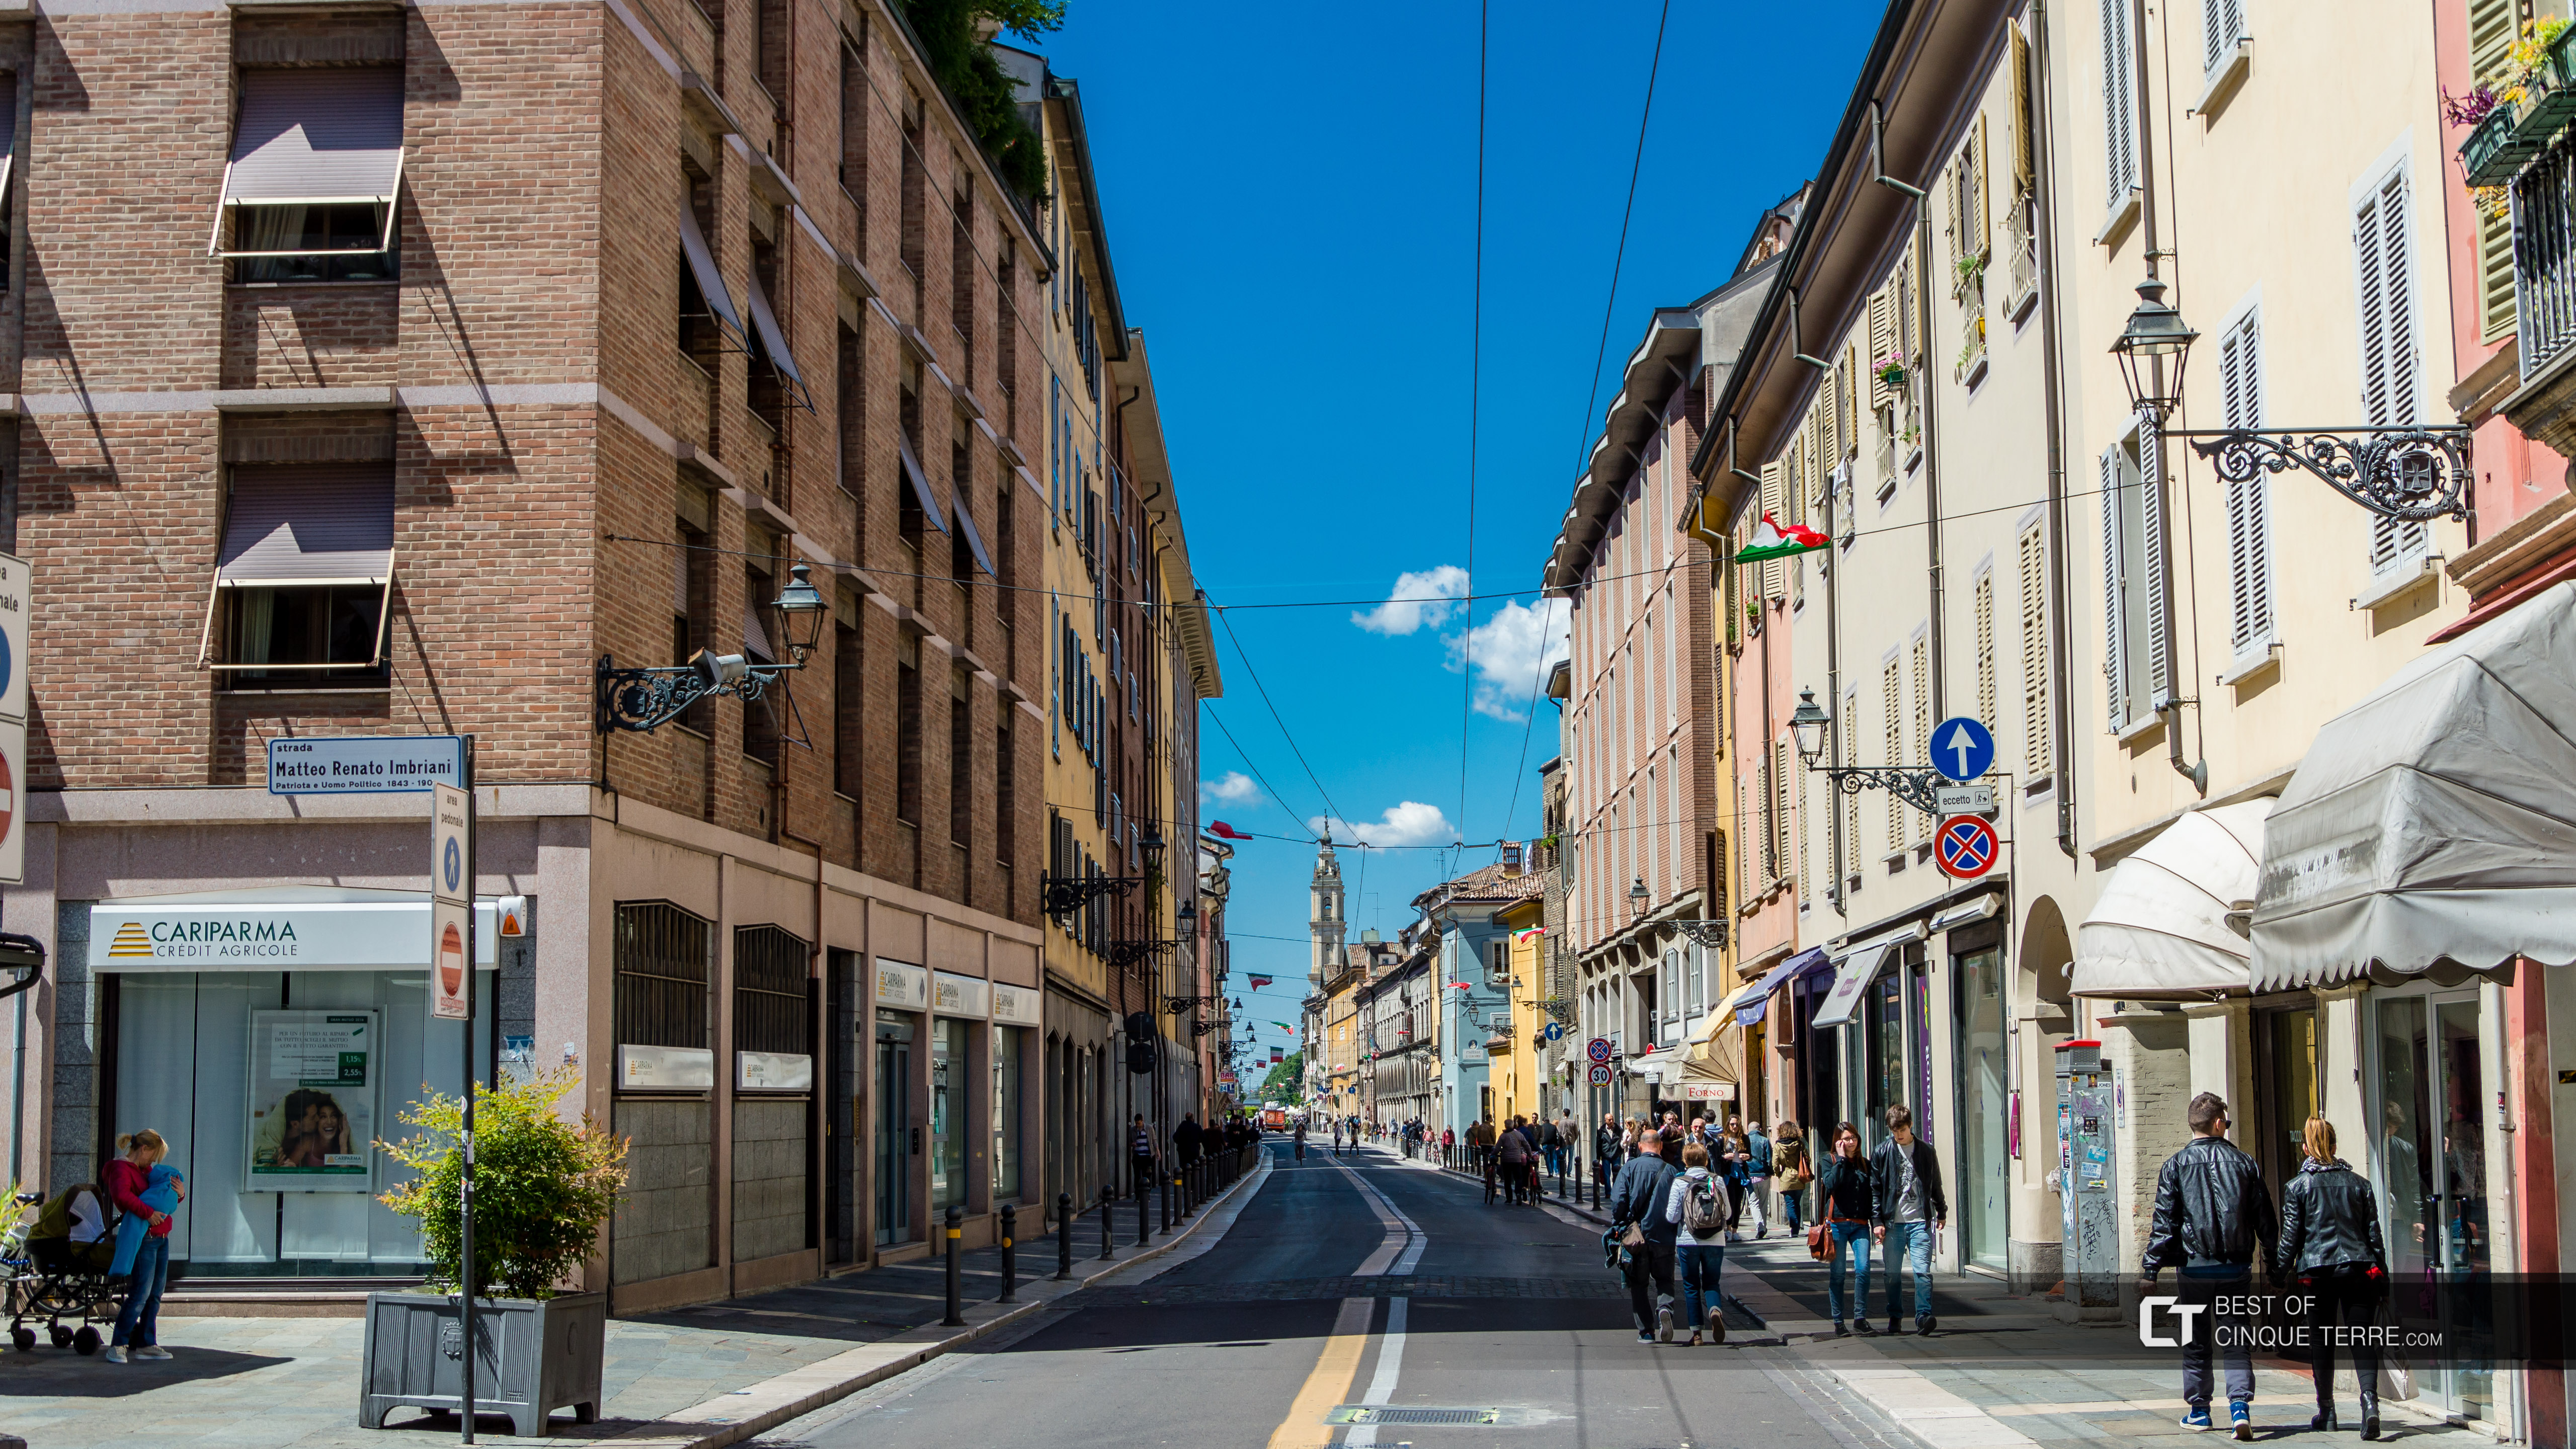 D'Azeglio Street, Parma, Italy